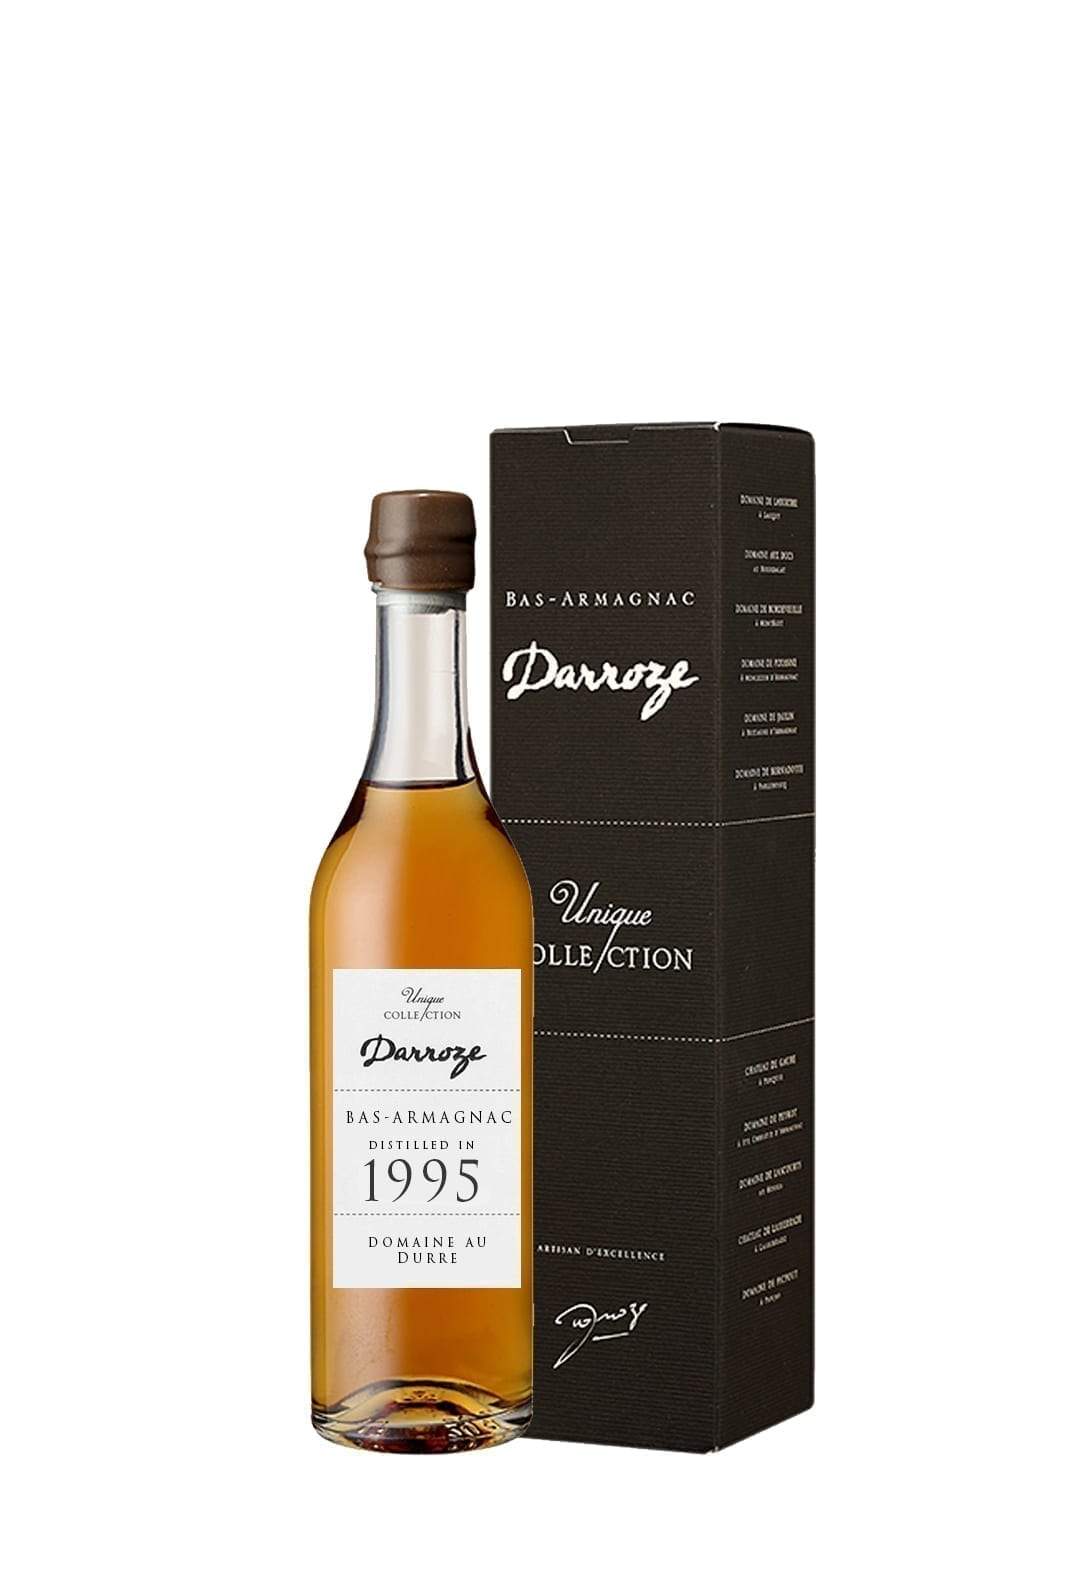 Darroze 1995 Domaine au Durre Armagnac 49.5% 200ml | Brandy | Shop online at Spirits of France